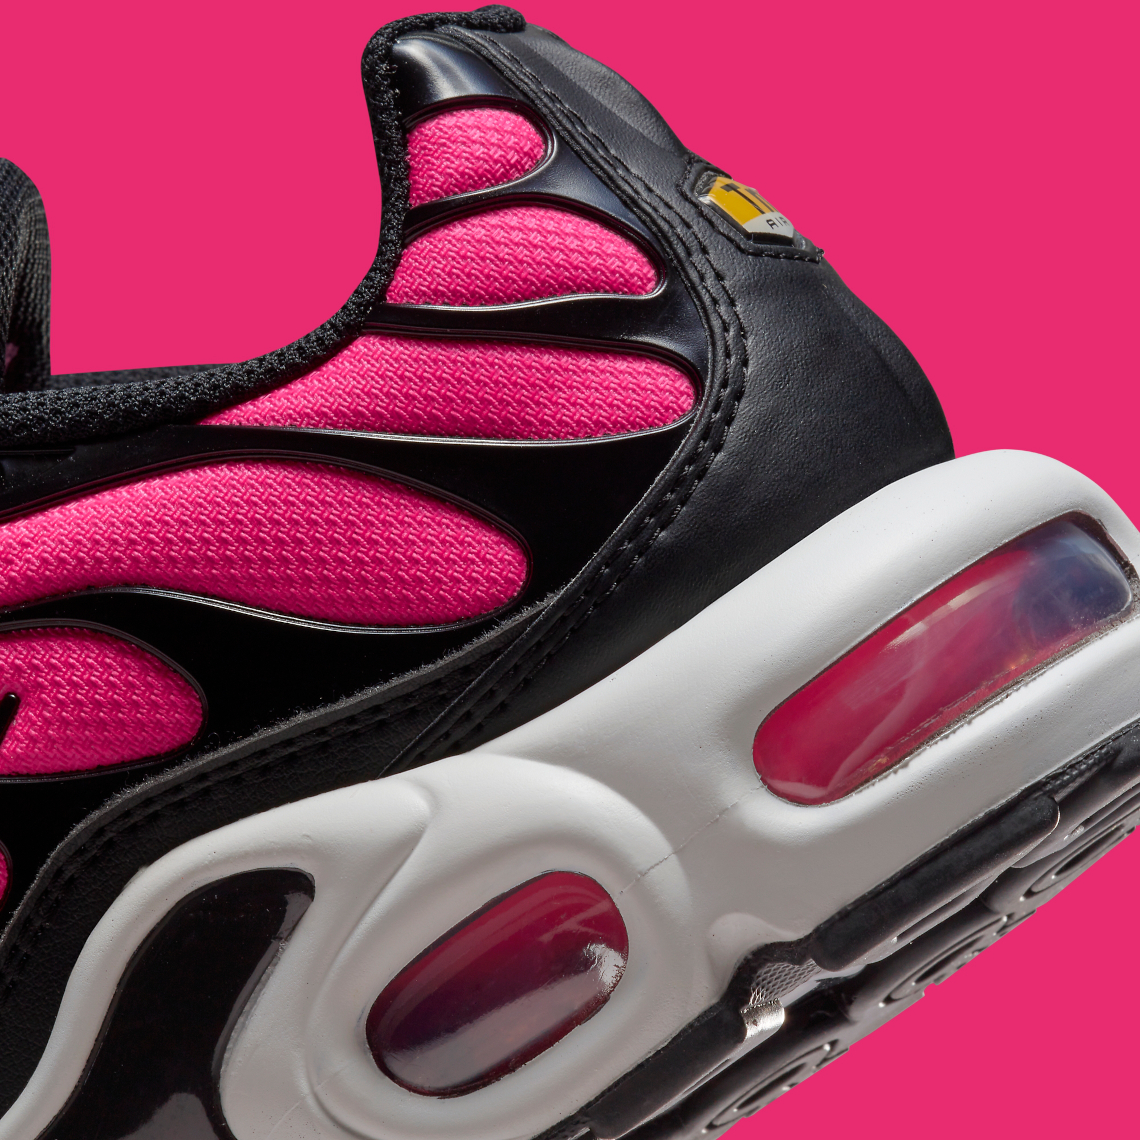 Nike Nike Downshifter 7 Black Pink Marathon Running Shoes Sneakers 852466-008 Dz3670 500 8